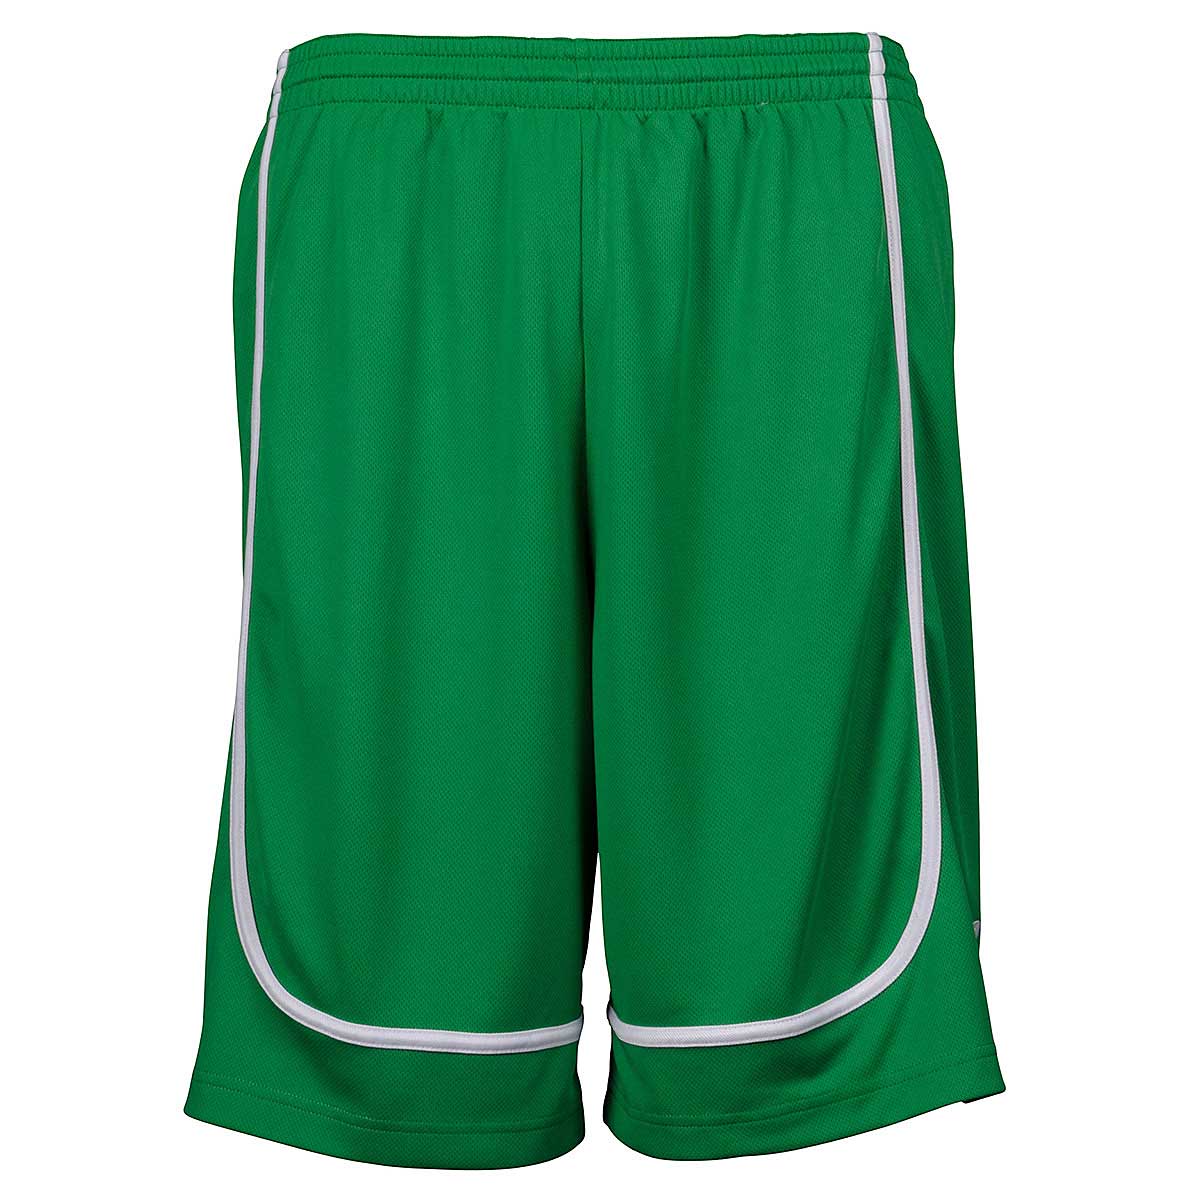 K1X Hardwood League Uniform Shorts, Boston Green/White